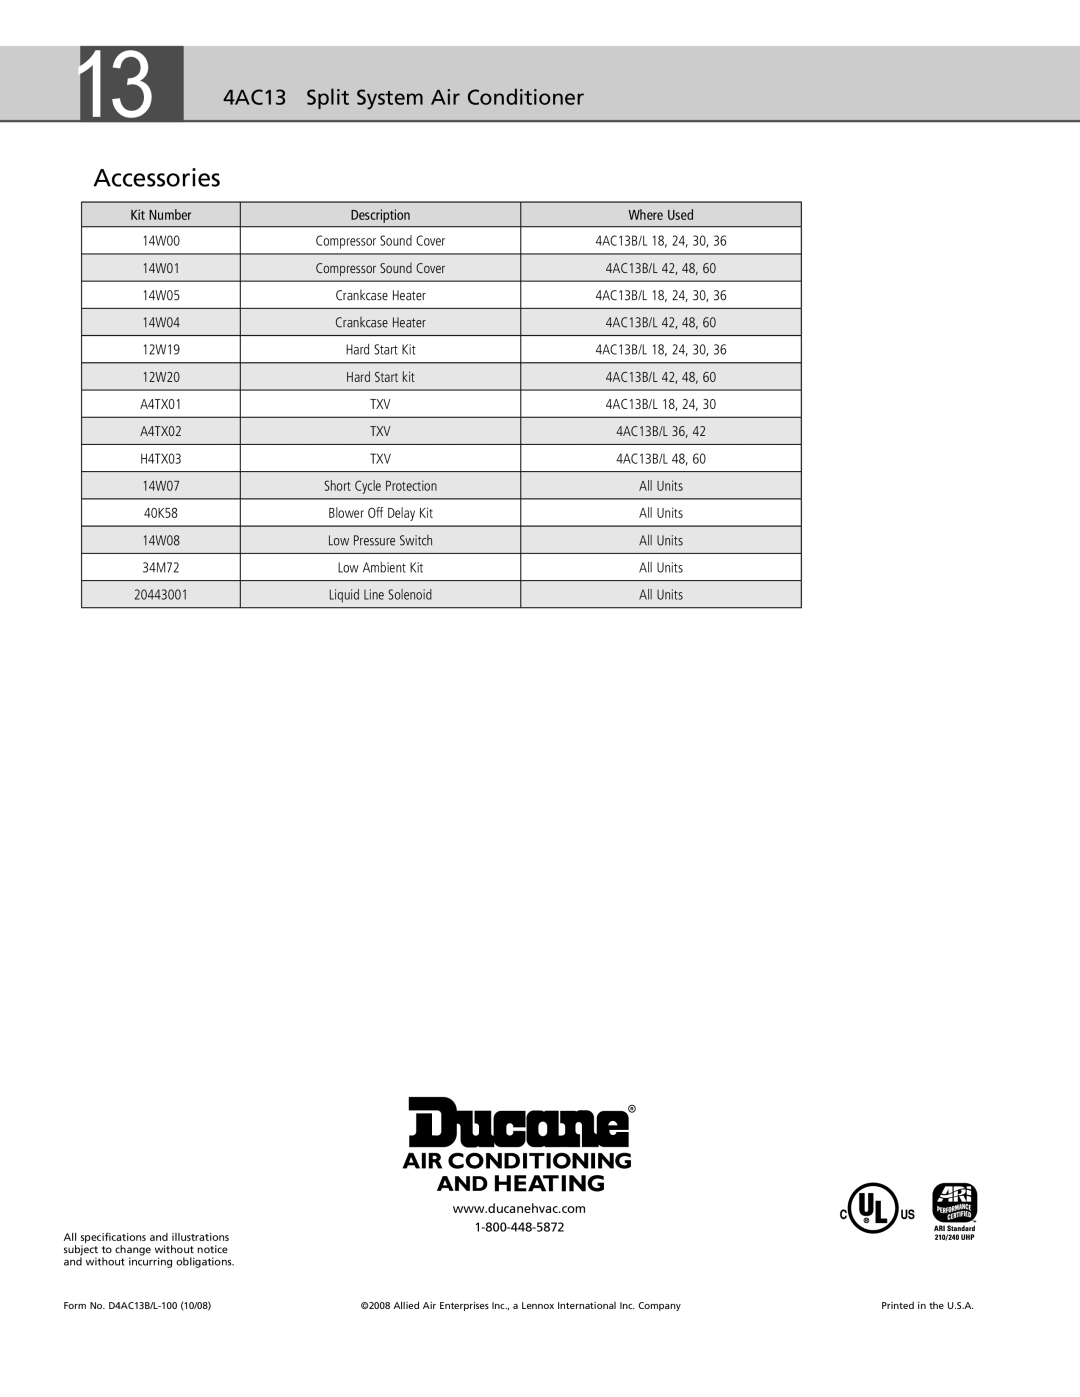 Ducane (HVAC) 4AC13 warranty Accessories, Kit Number, Description, Where Used 